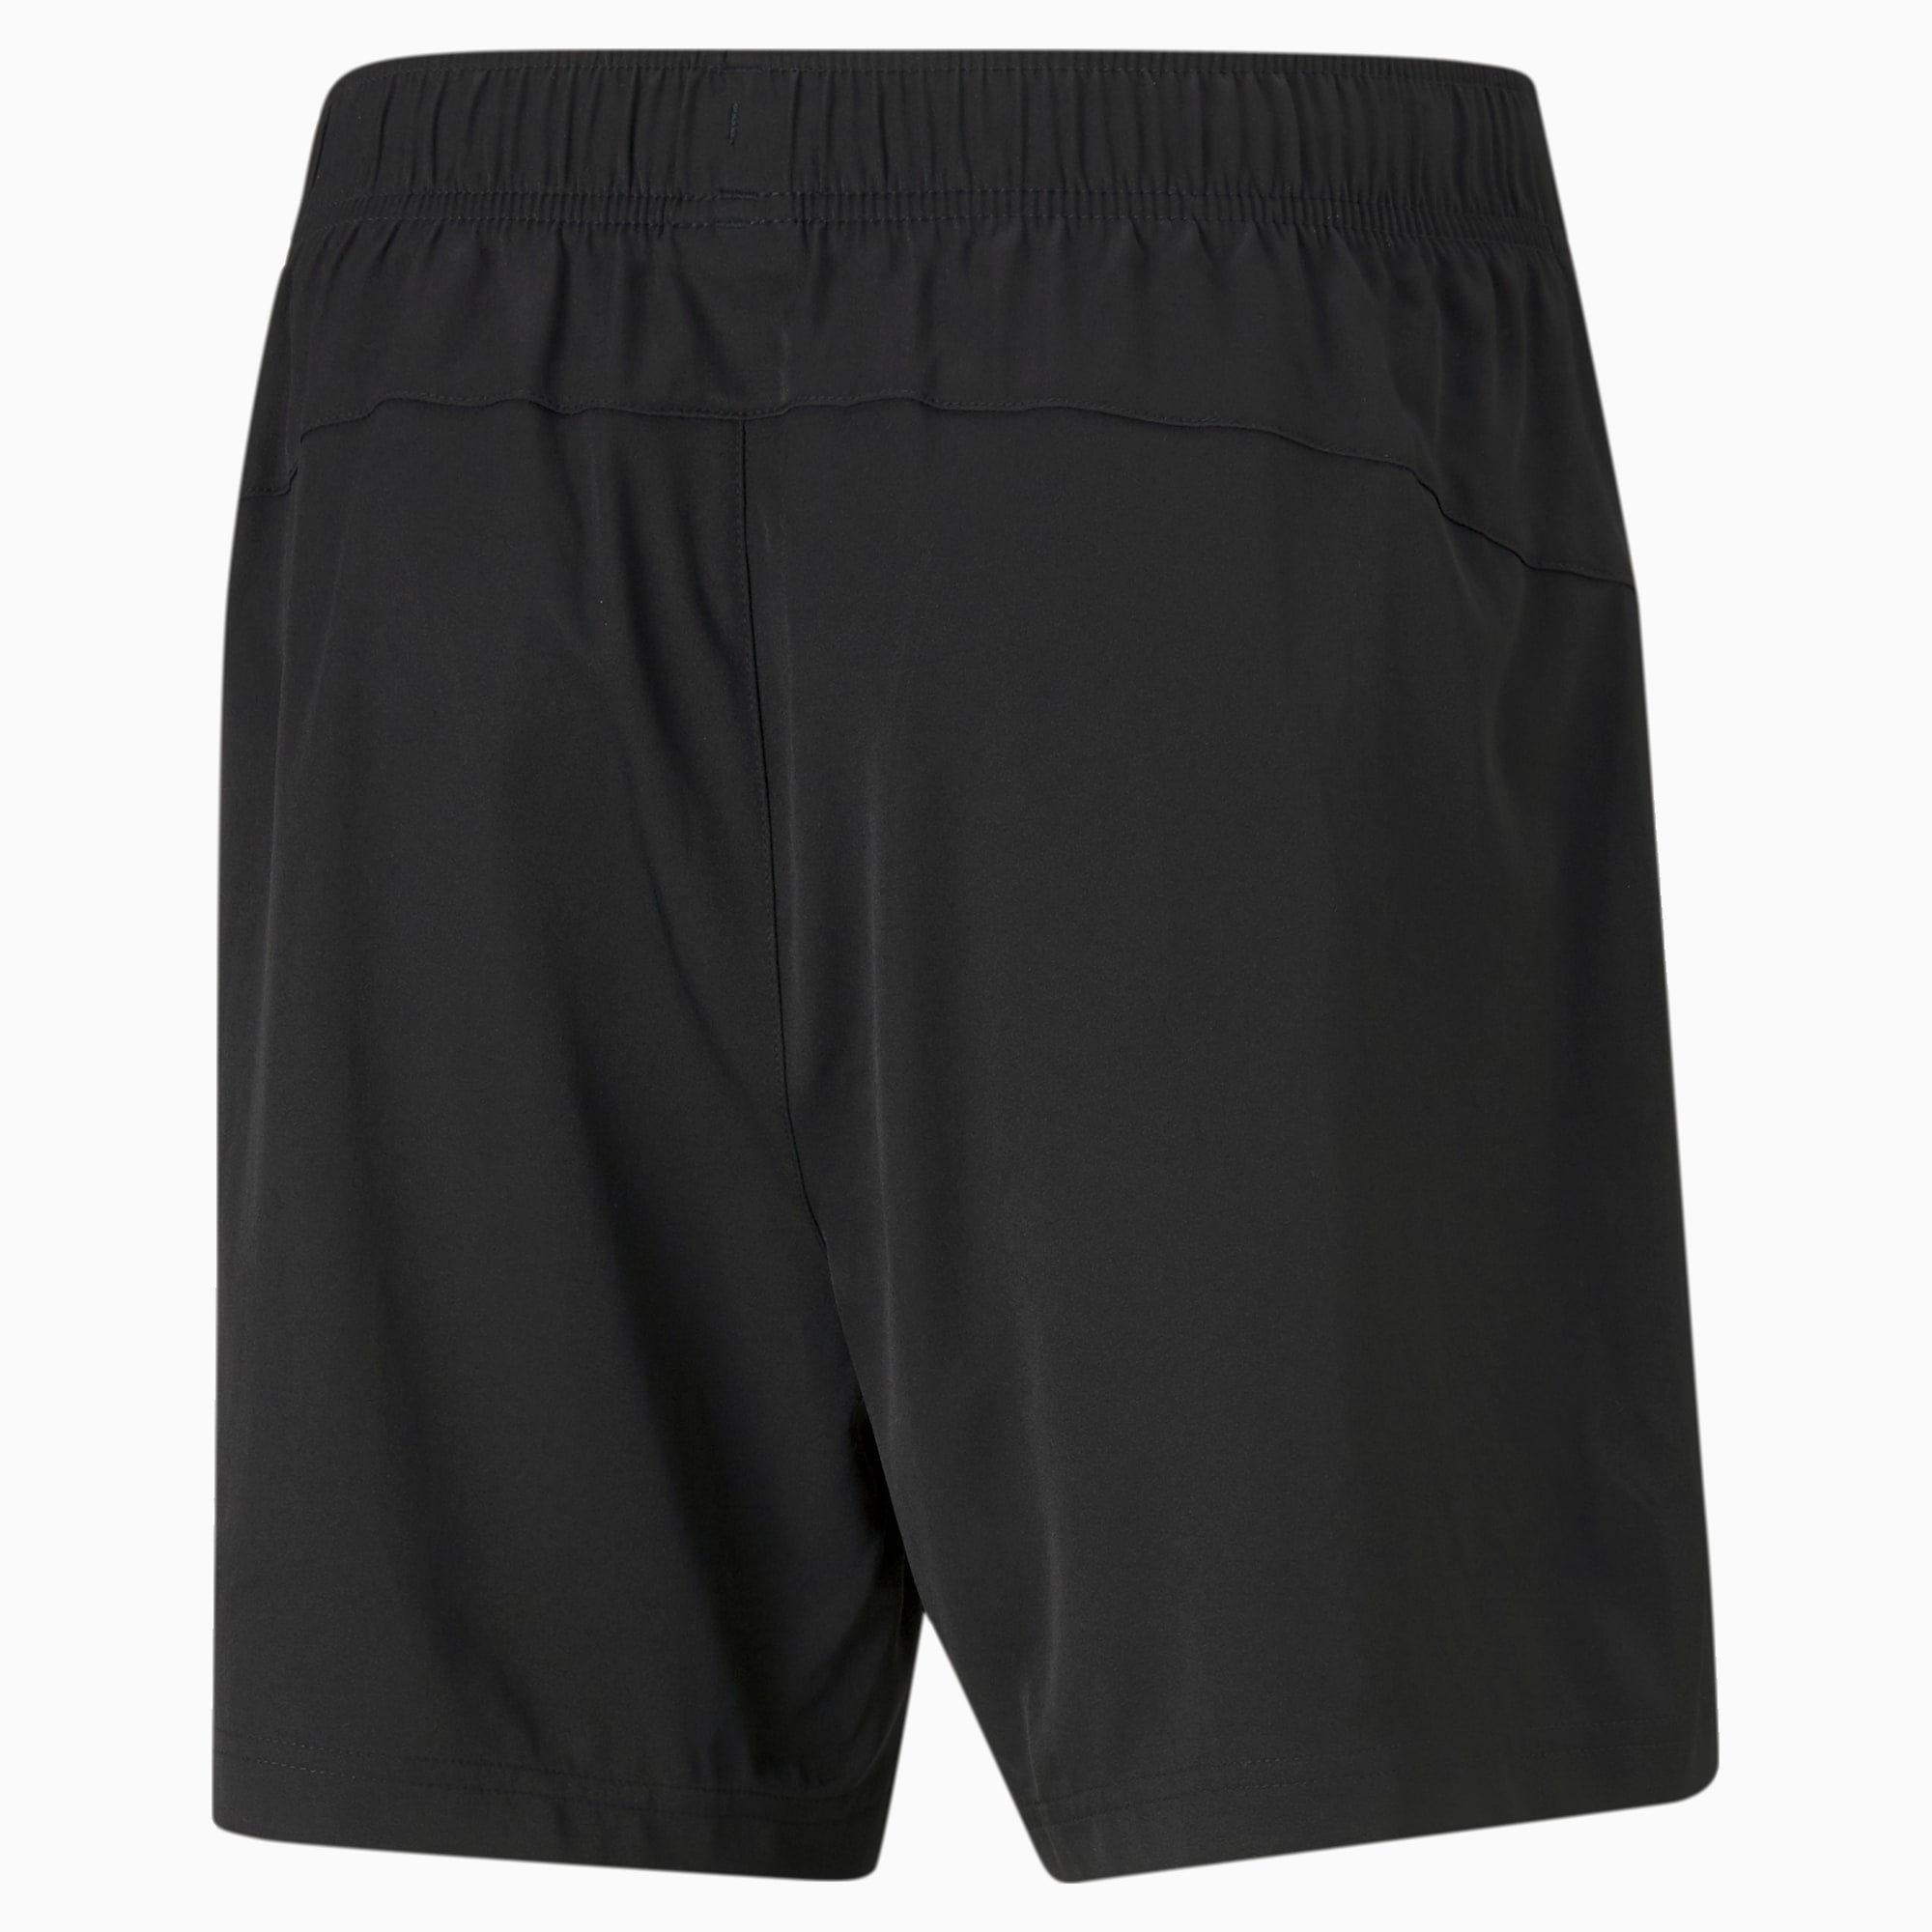 PUMA Active Woven 5 Men's Shorts, Black, Size L, Clothing